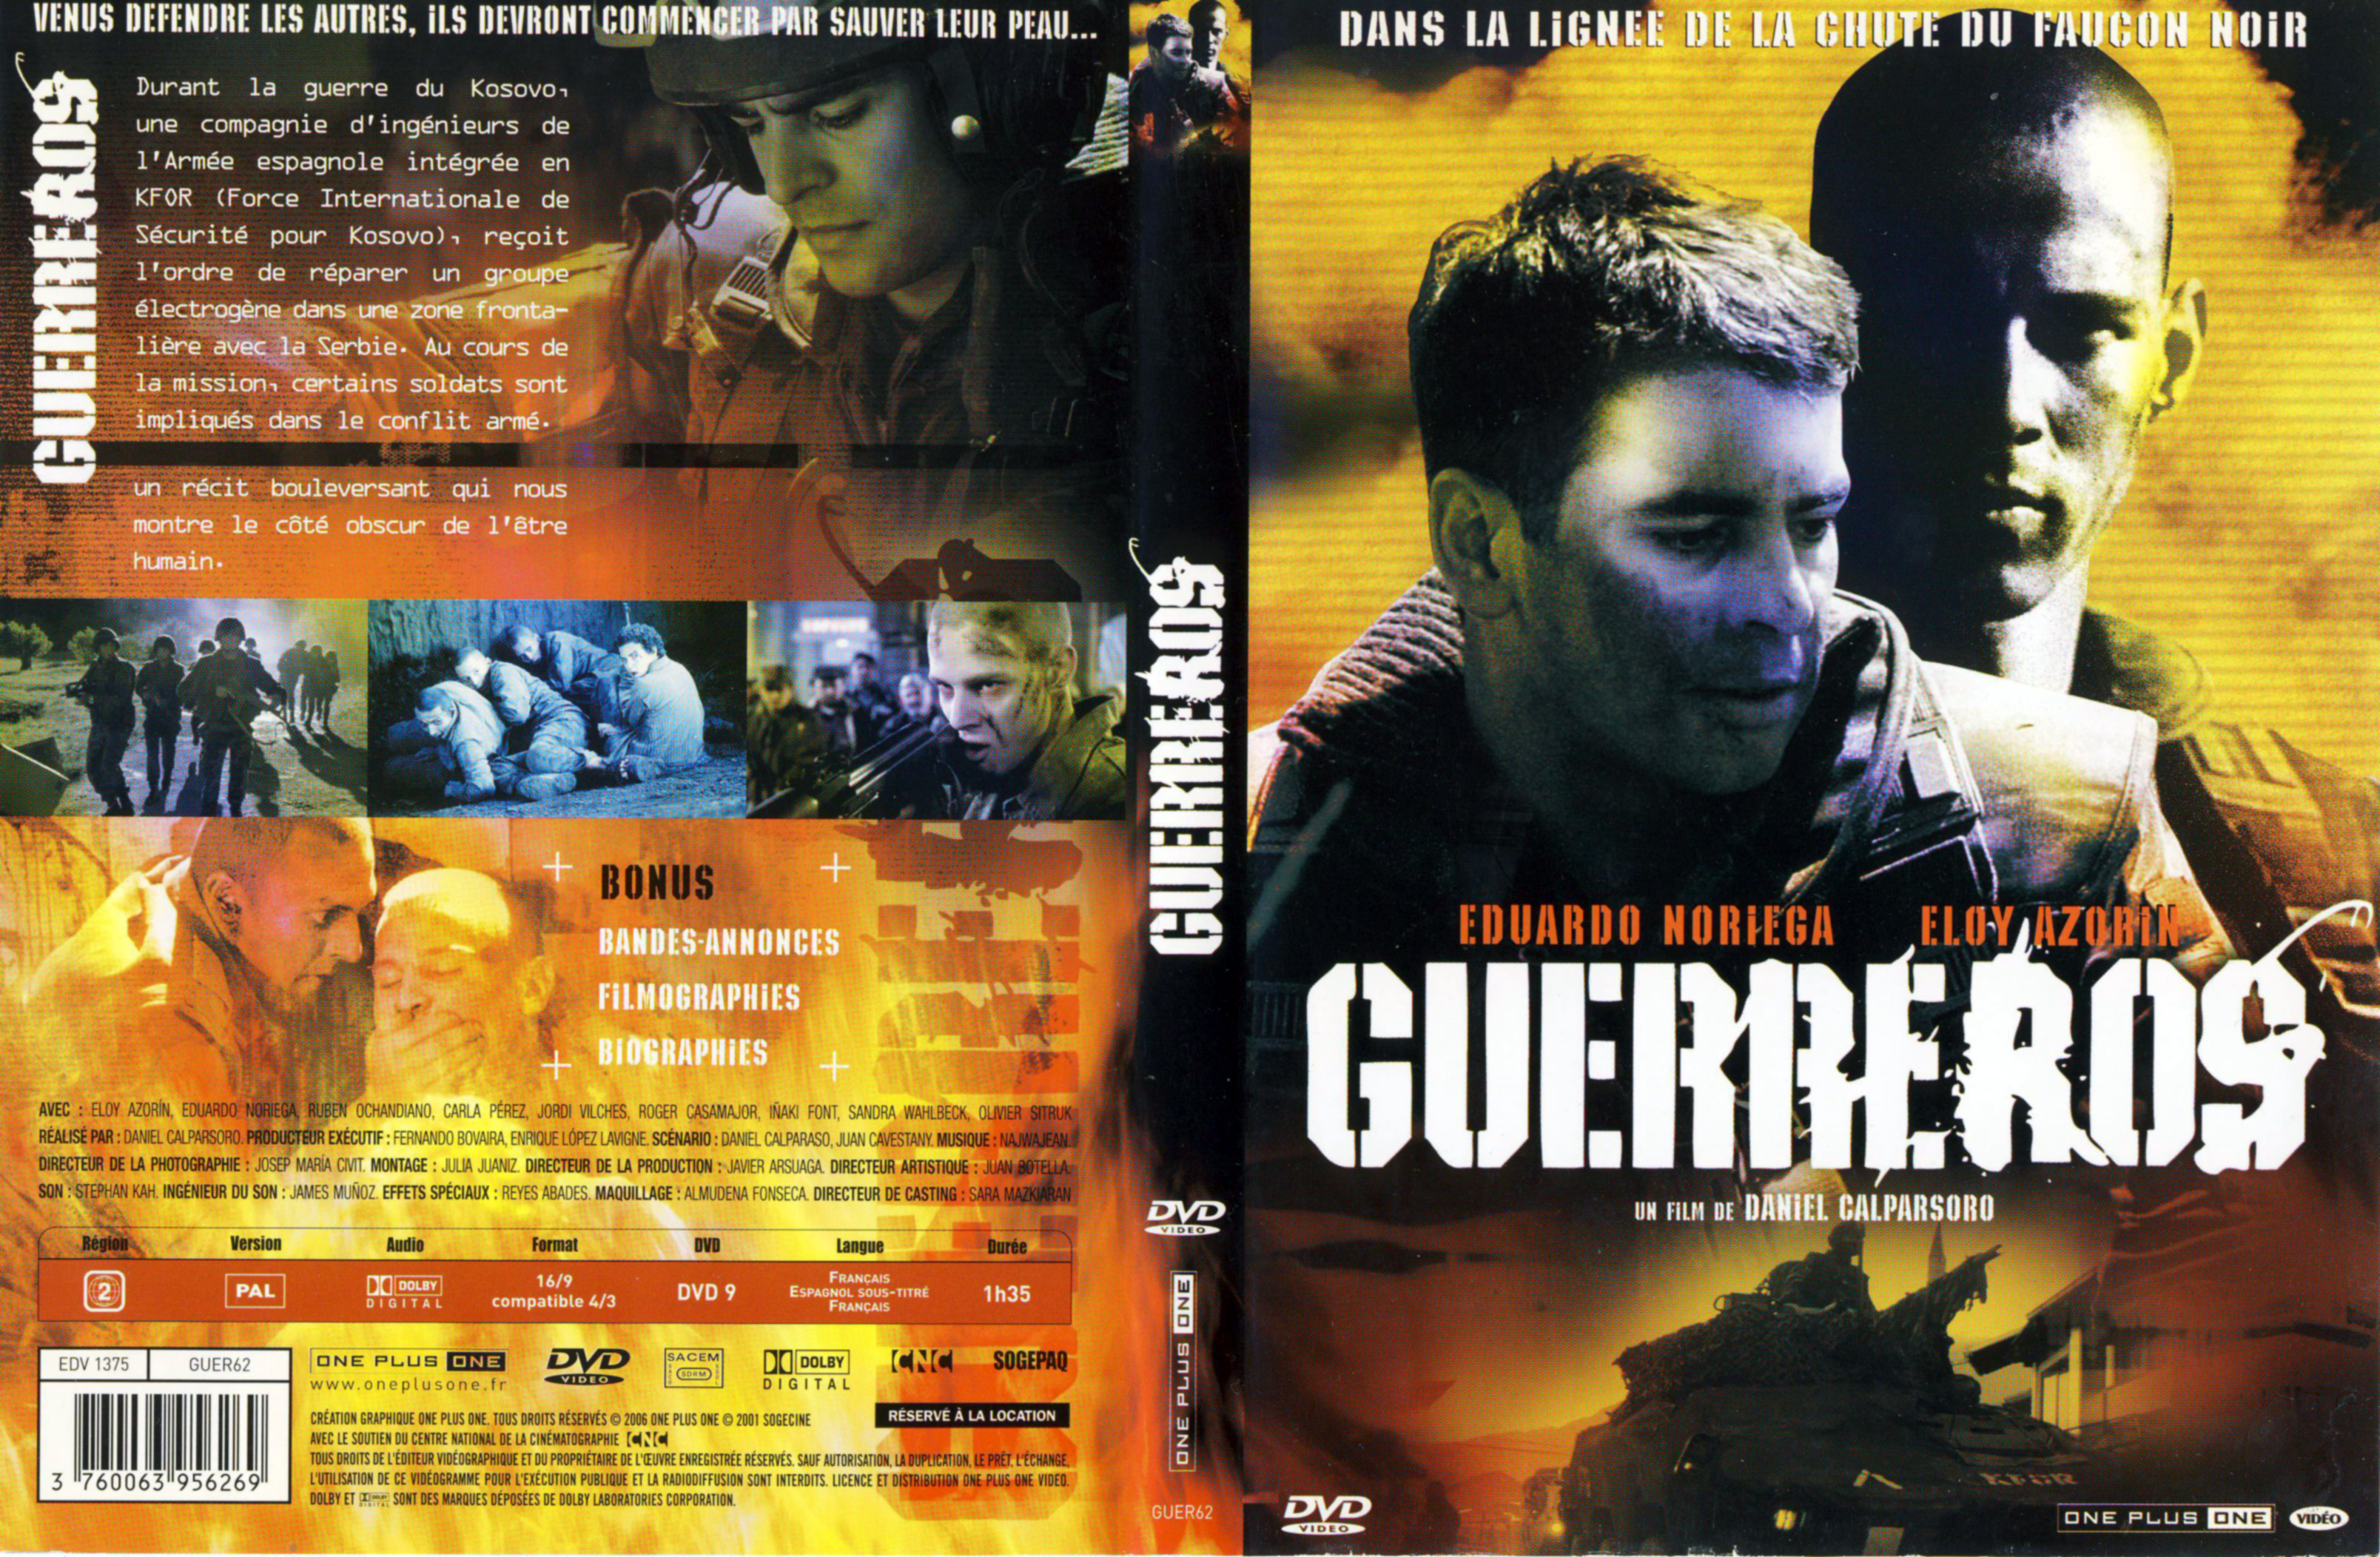 Jaquette DVD Guerreros